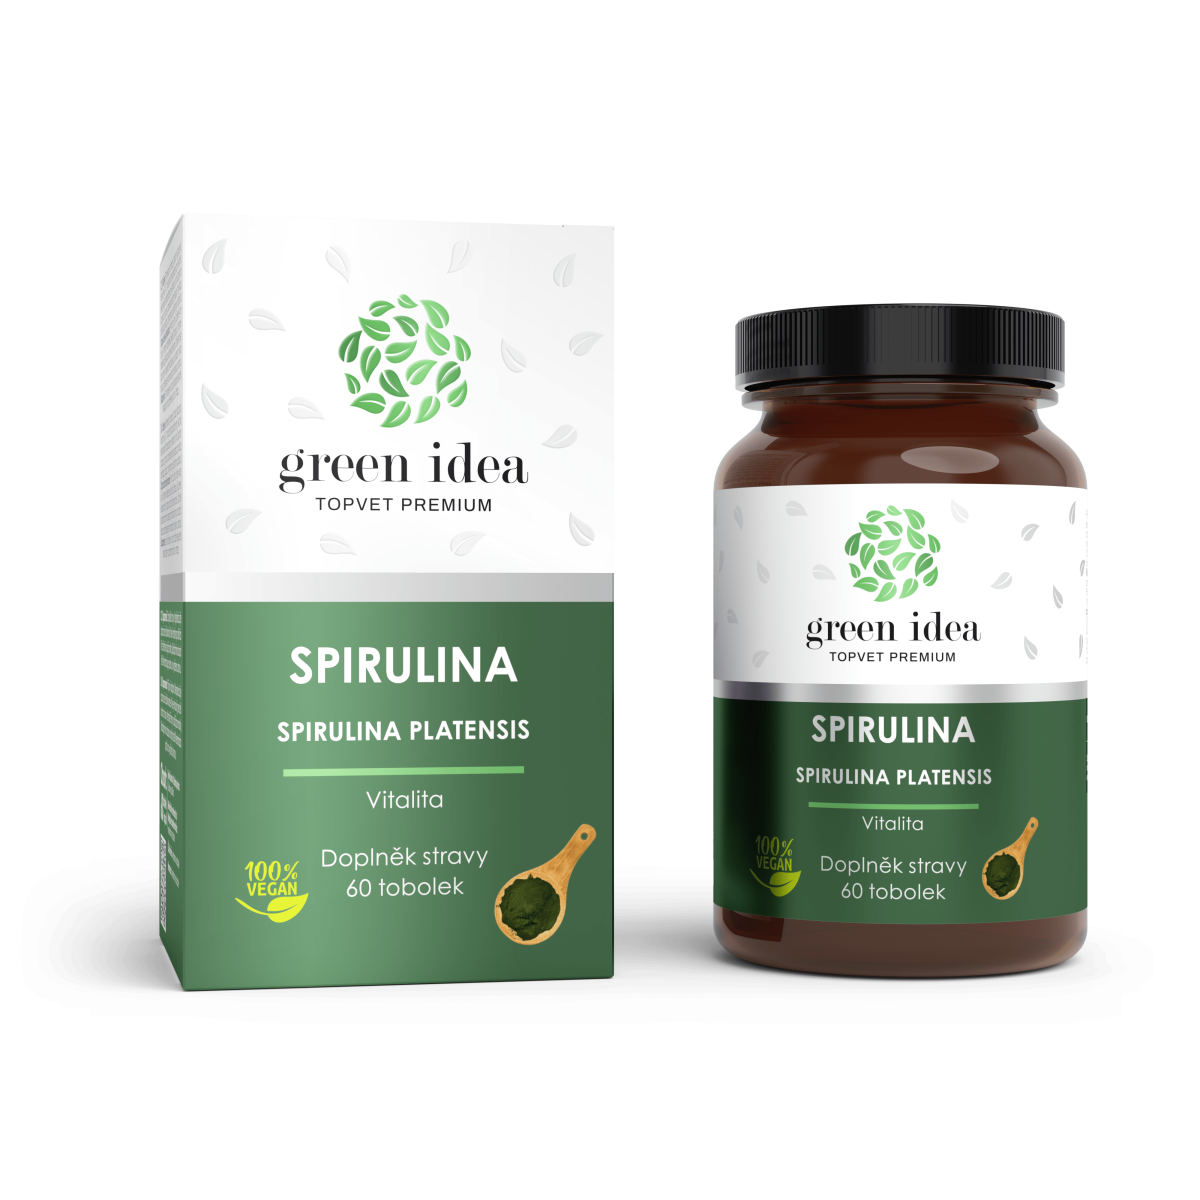 Spirulina herbal extract